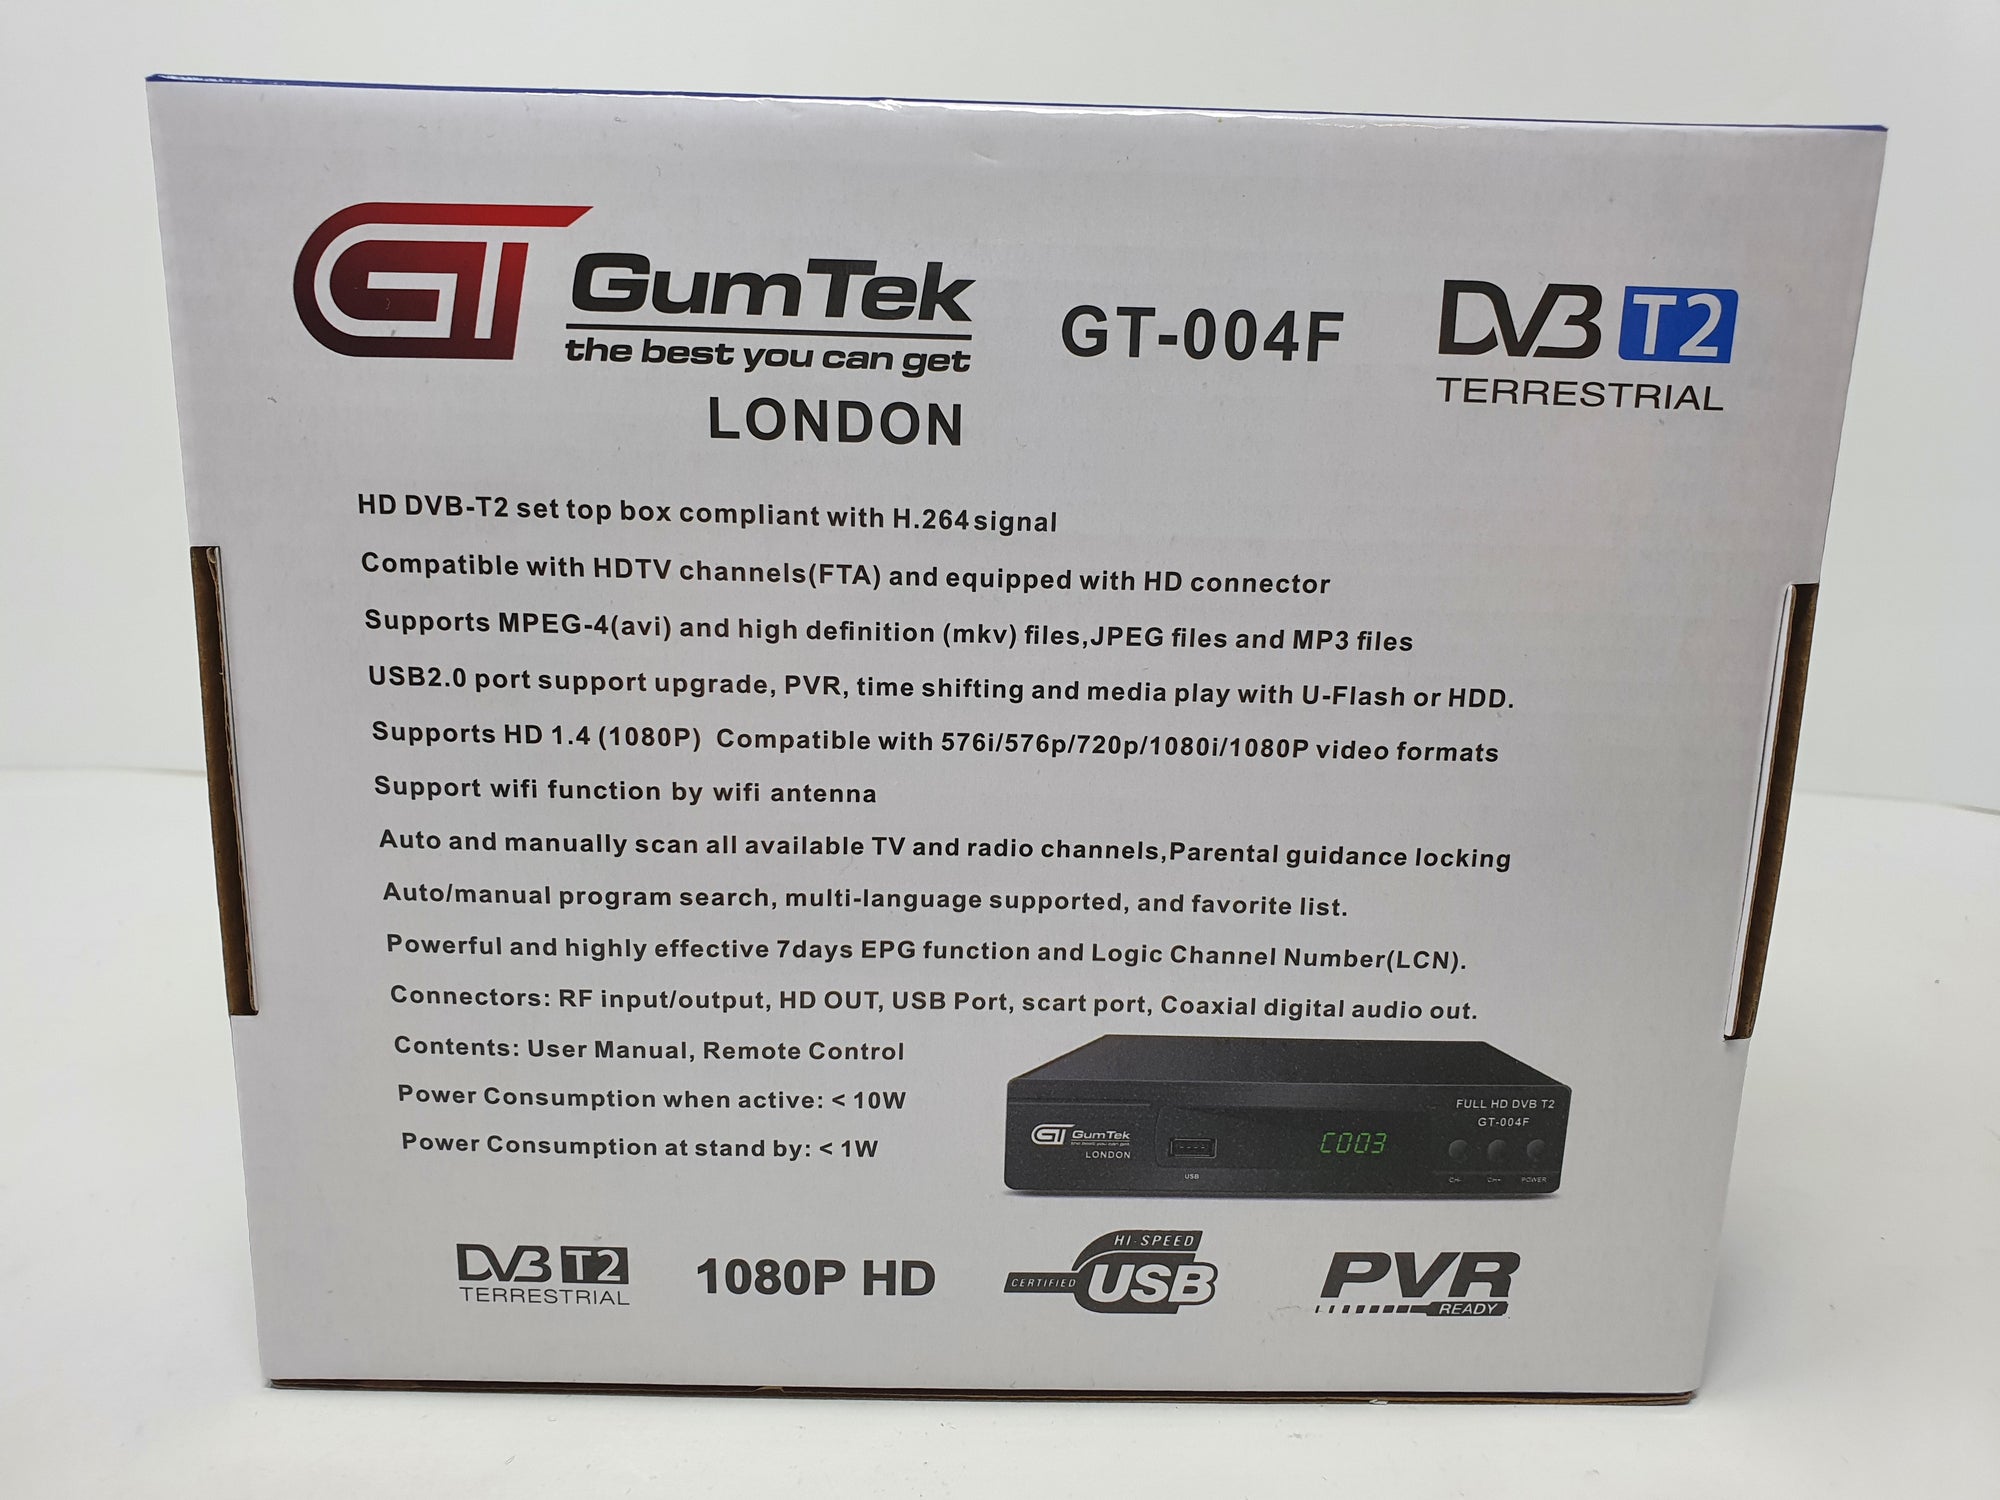 GumTek Full HD Freeview Set Top Box Plus Recorder Digital TV Receiver Digi Box 2023 software